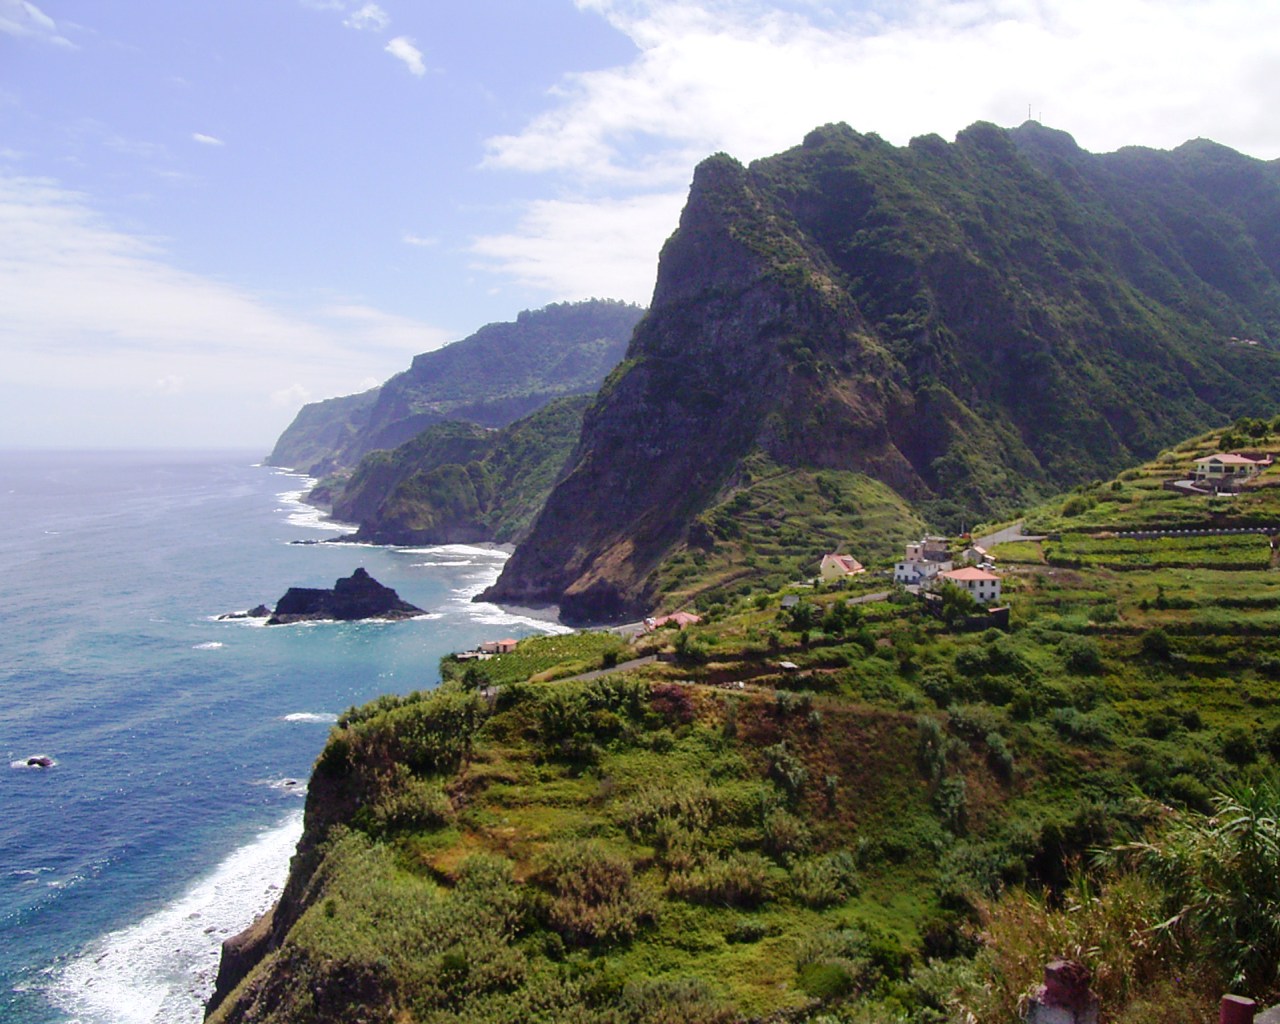 The North coast of Madeira